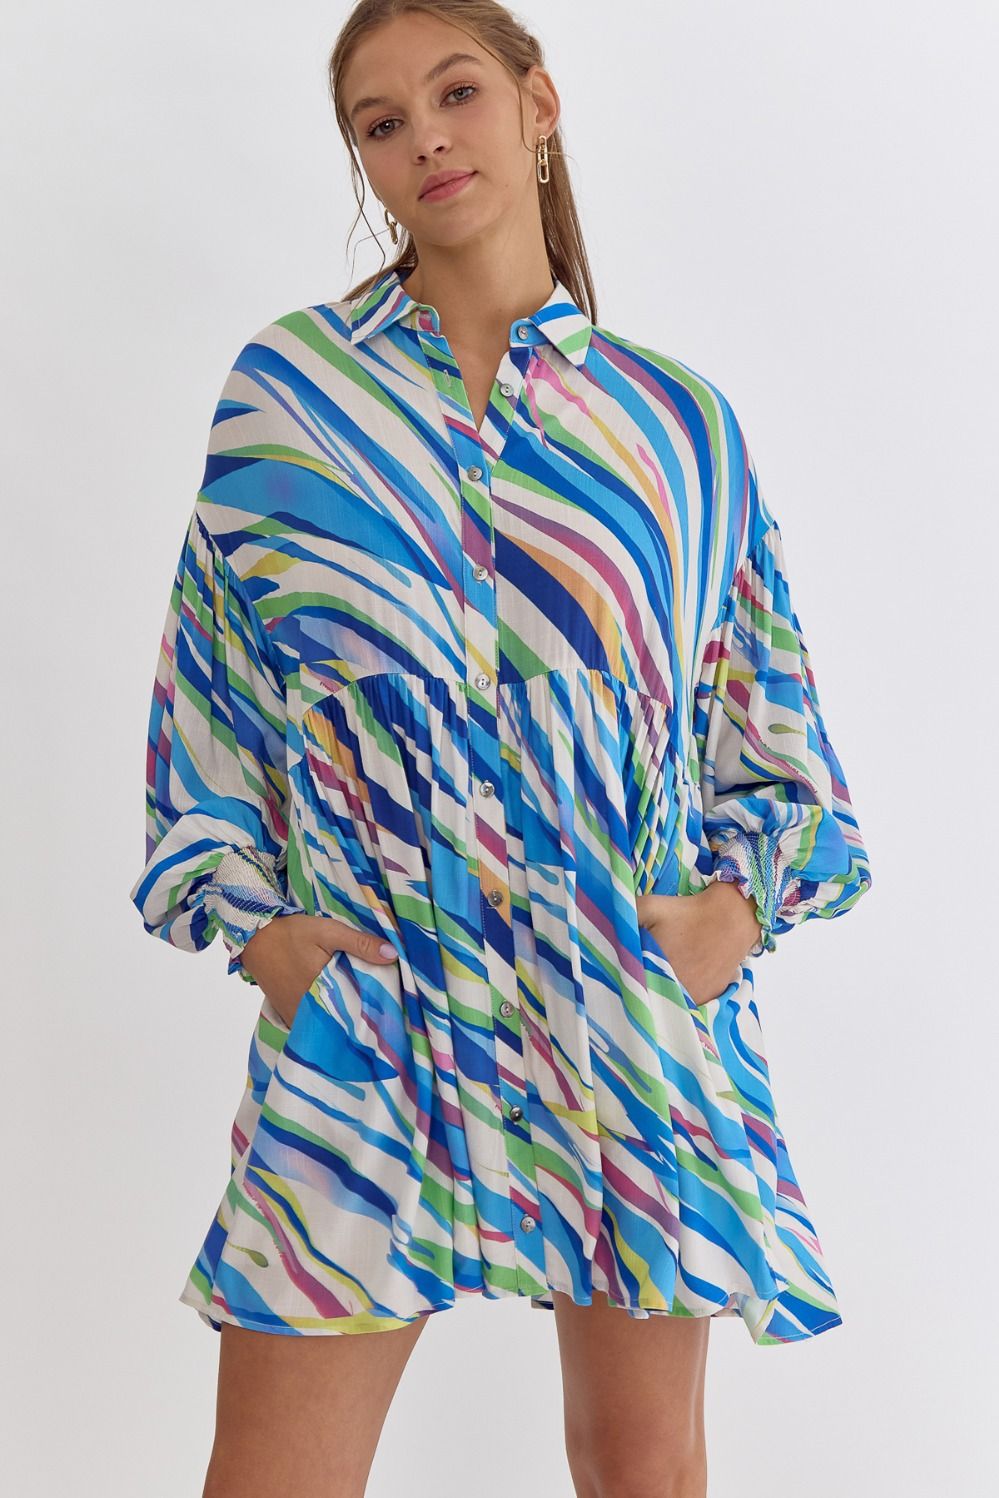 Brushstroke Printed Shirt Dress- Royal Blue Combo